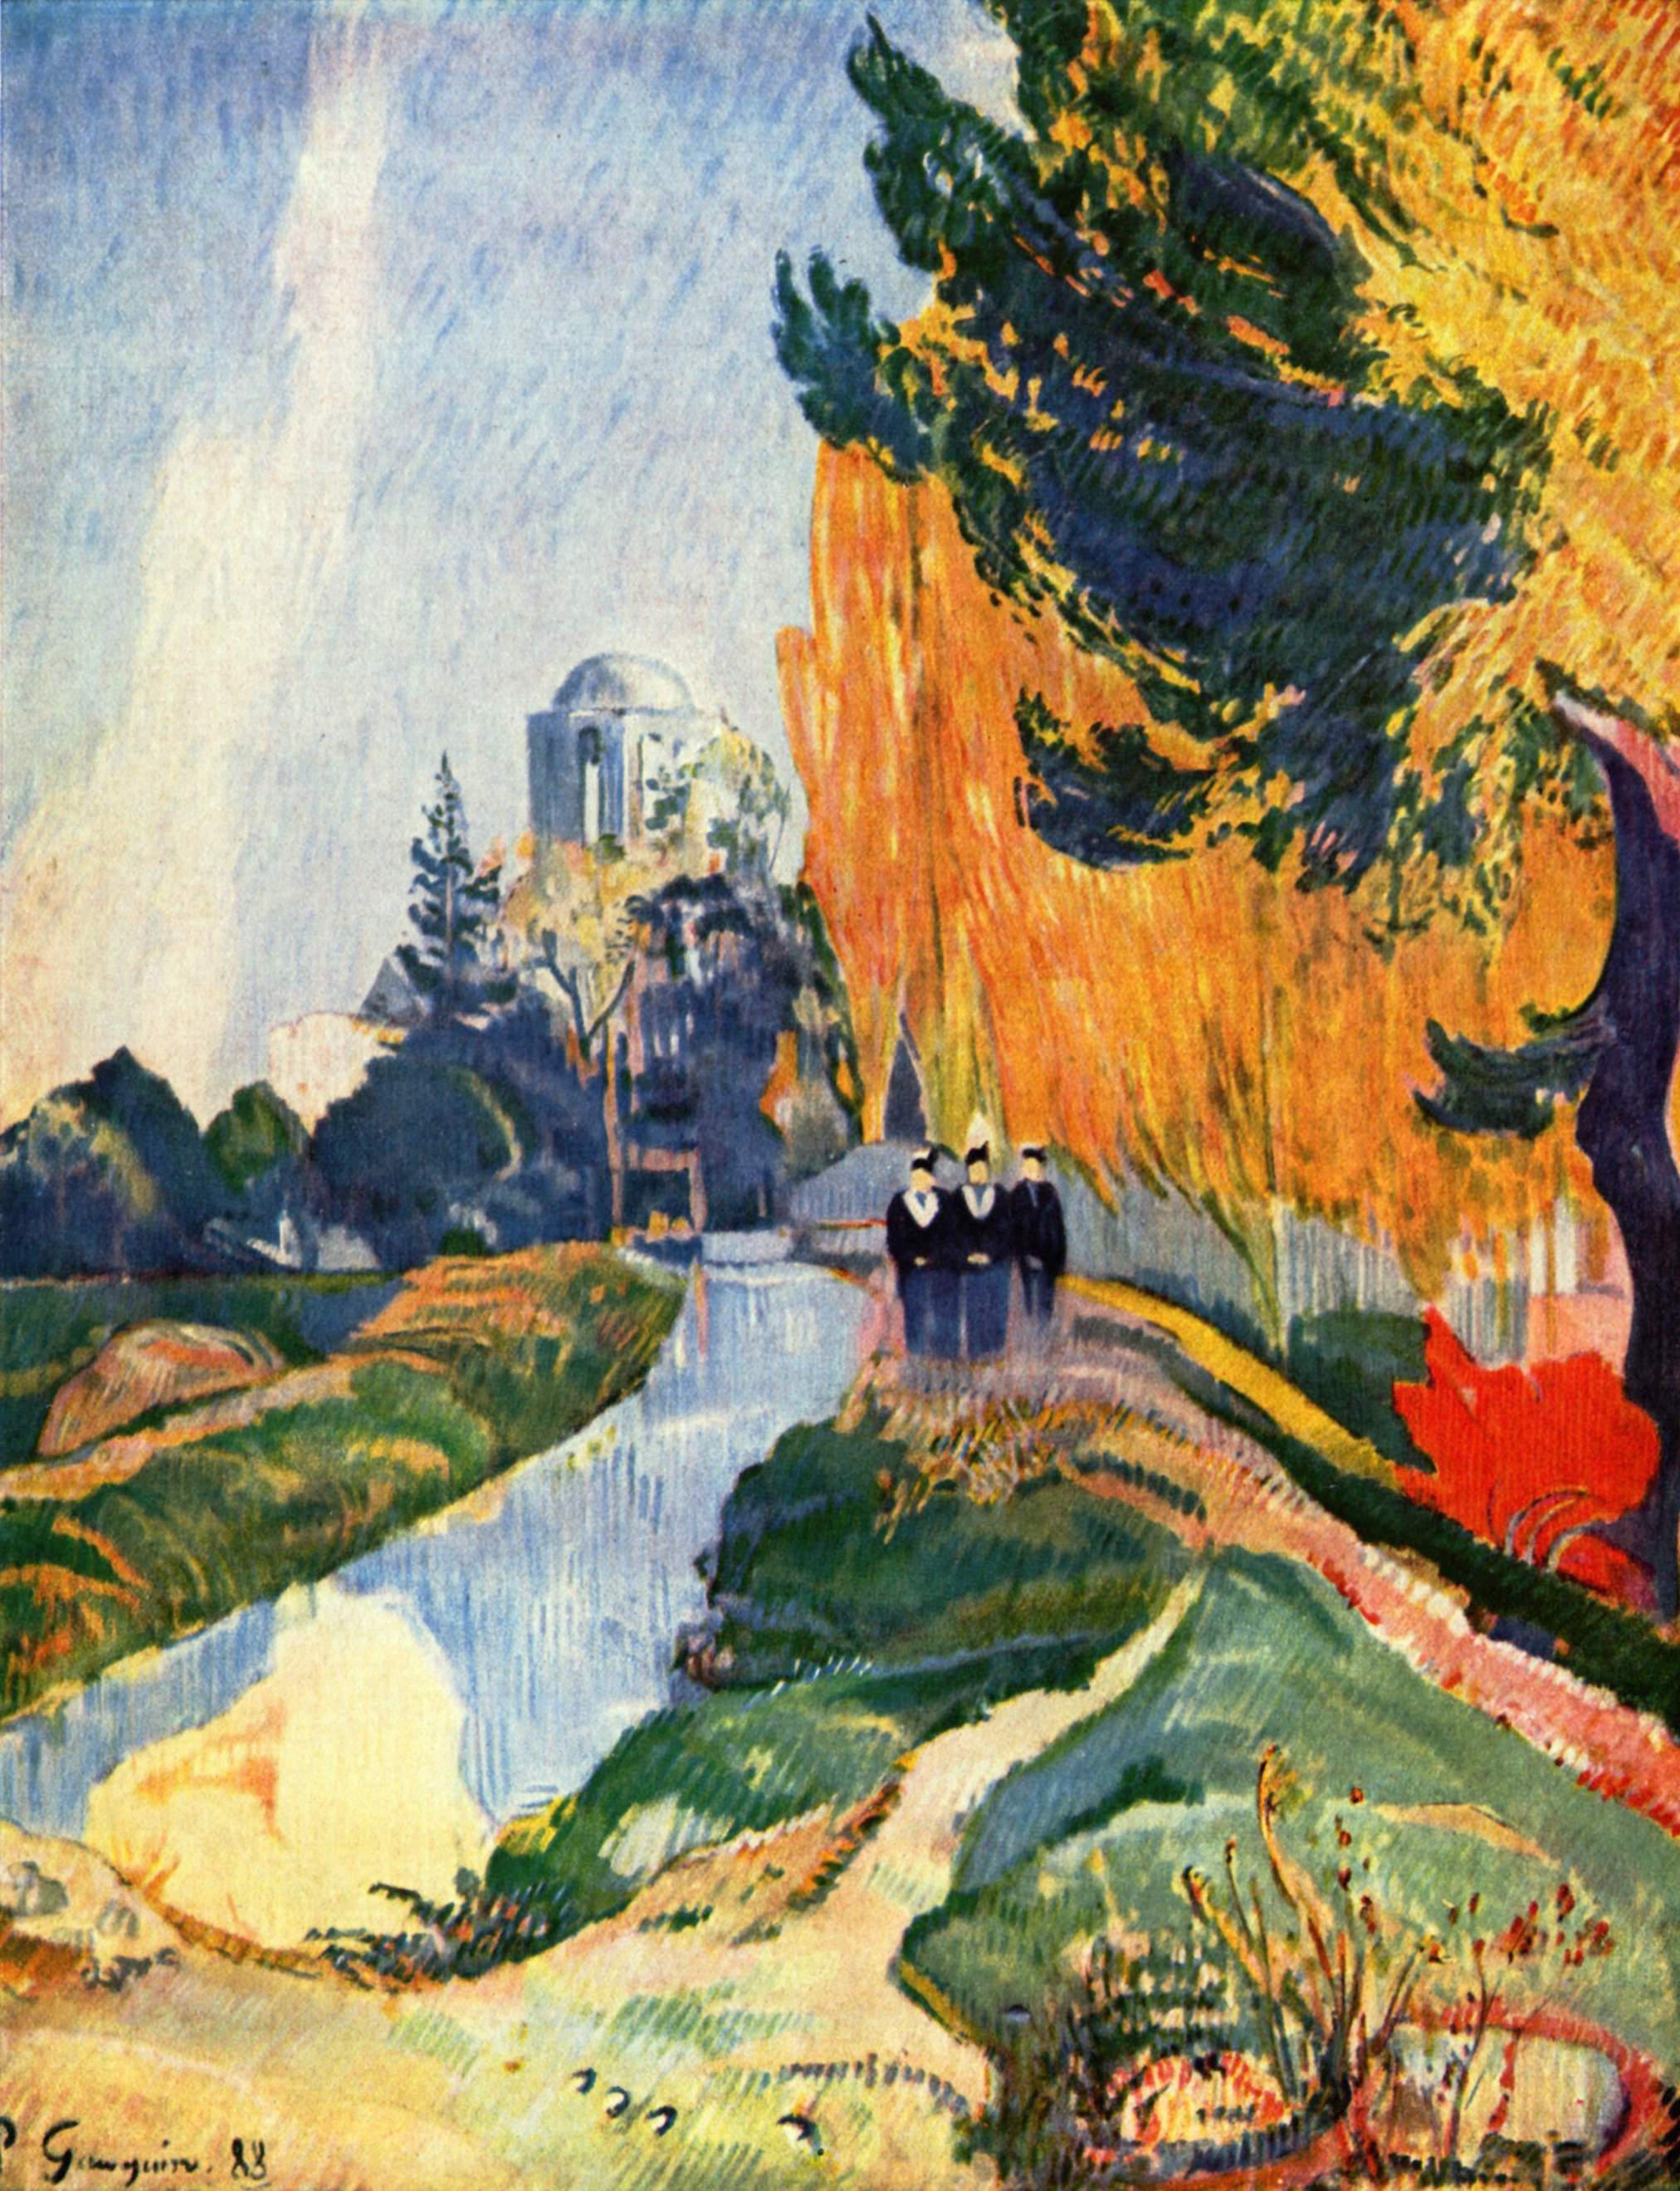 Алискан by Paul Gauguin - 1888 - 91.6 × 72.5 см 